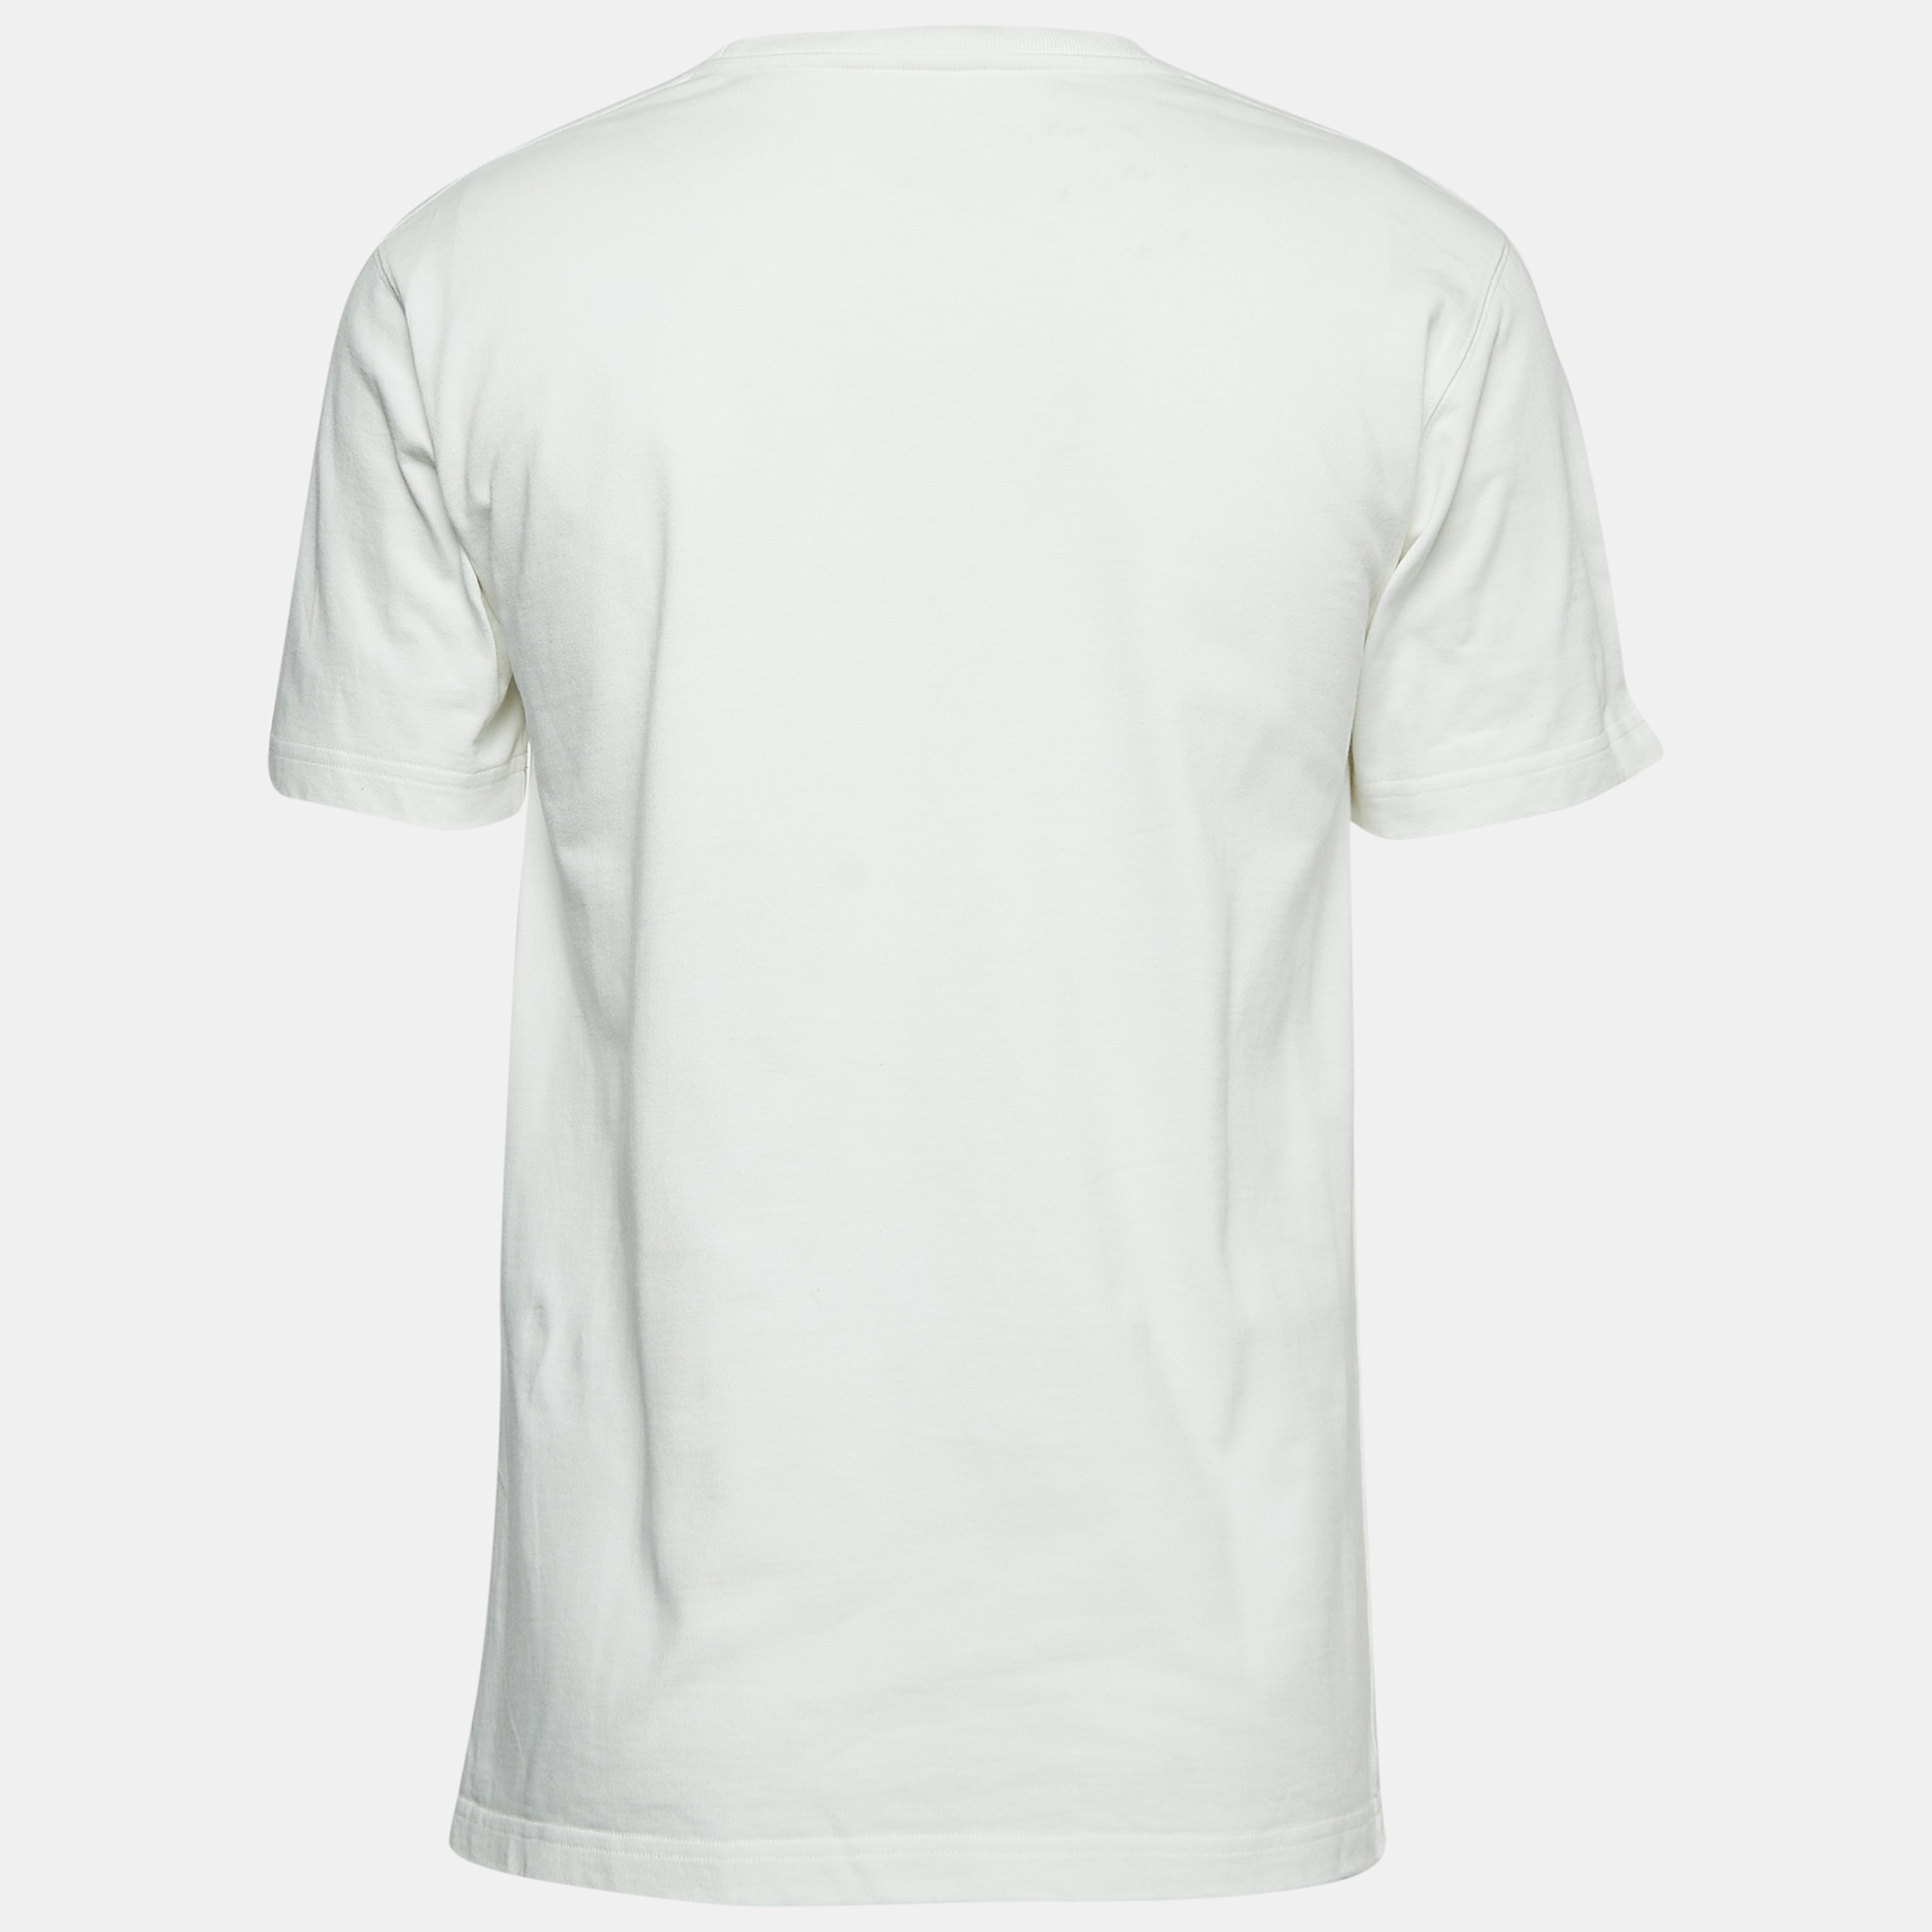 

Dior X Daniel Arsham White Cotton Printed T-Shirt